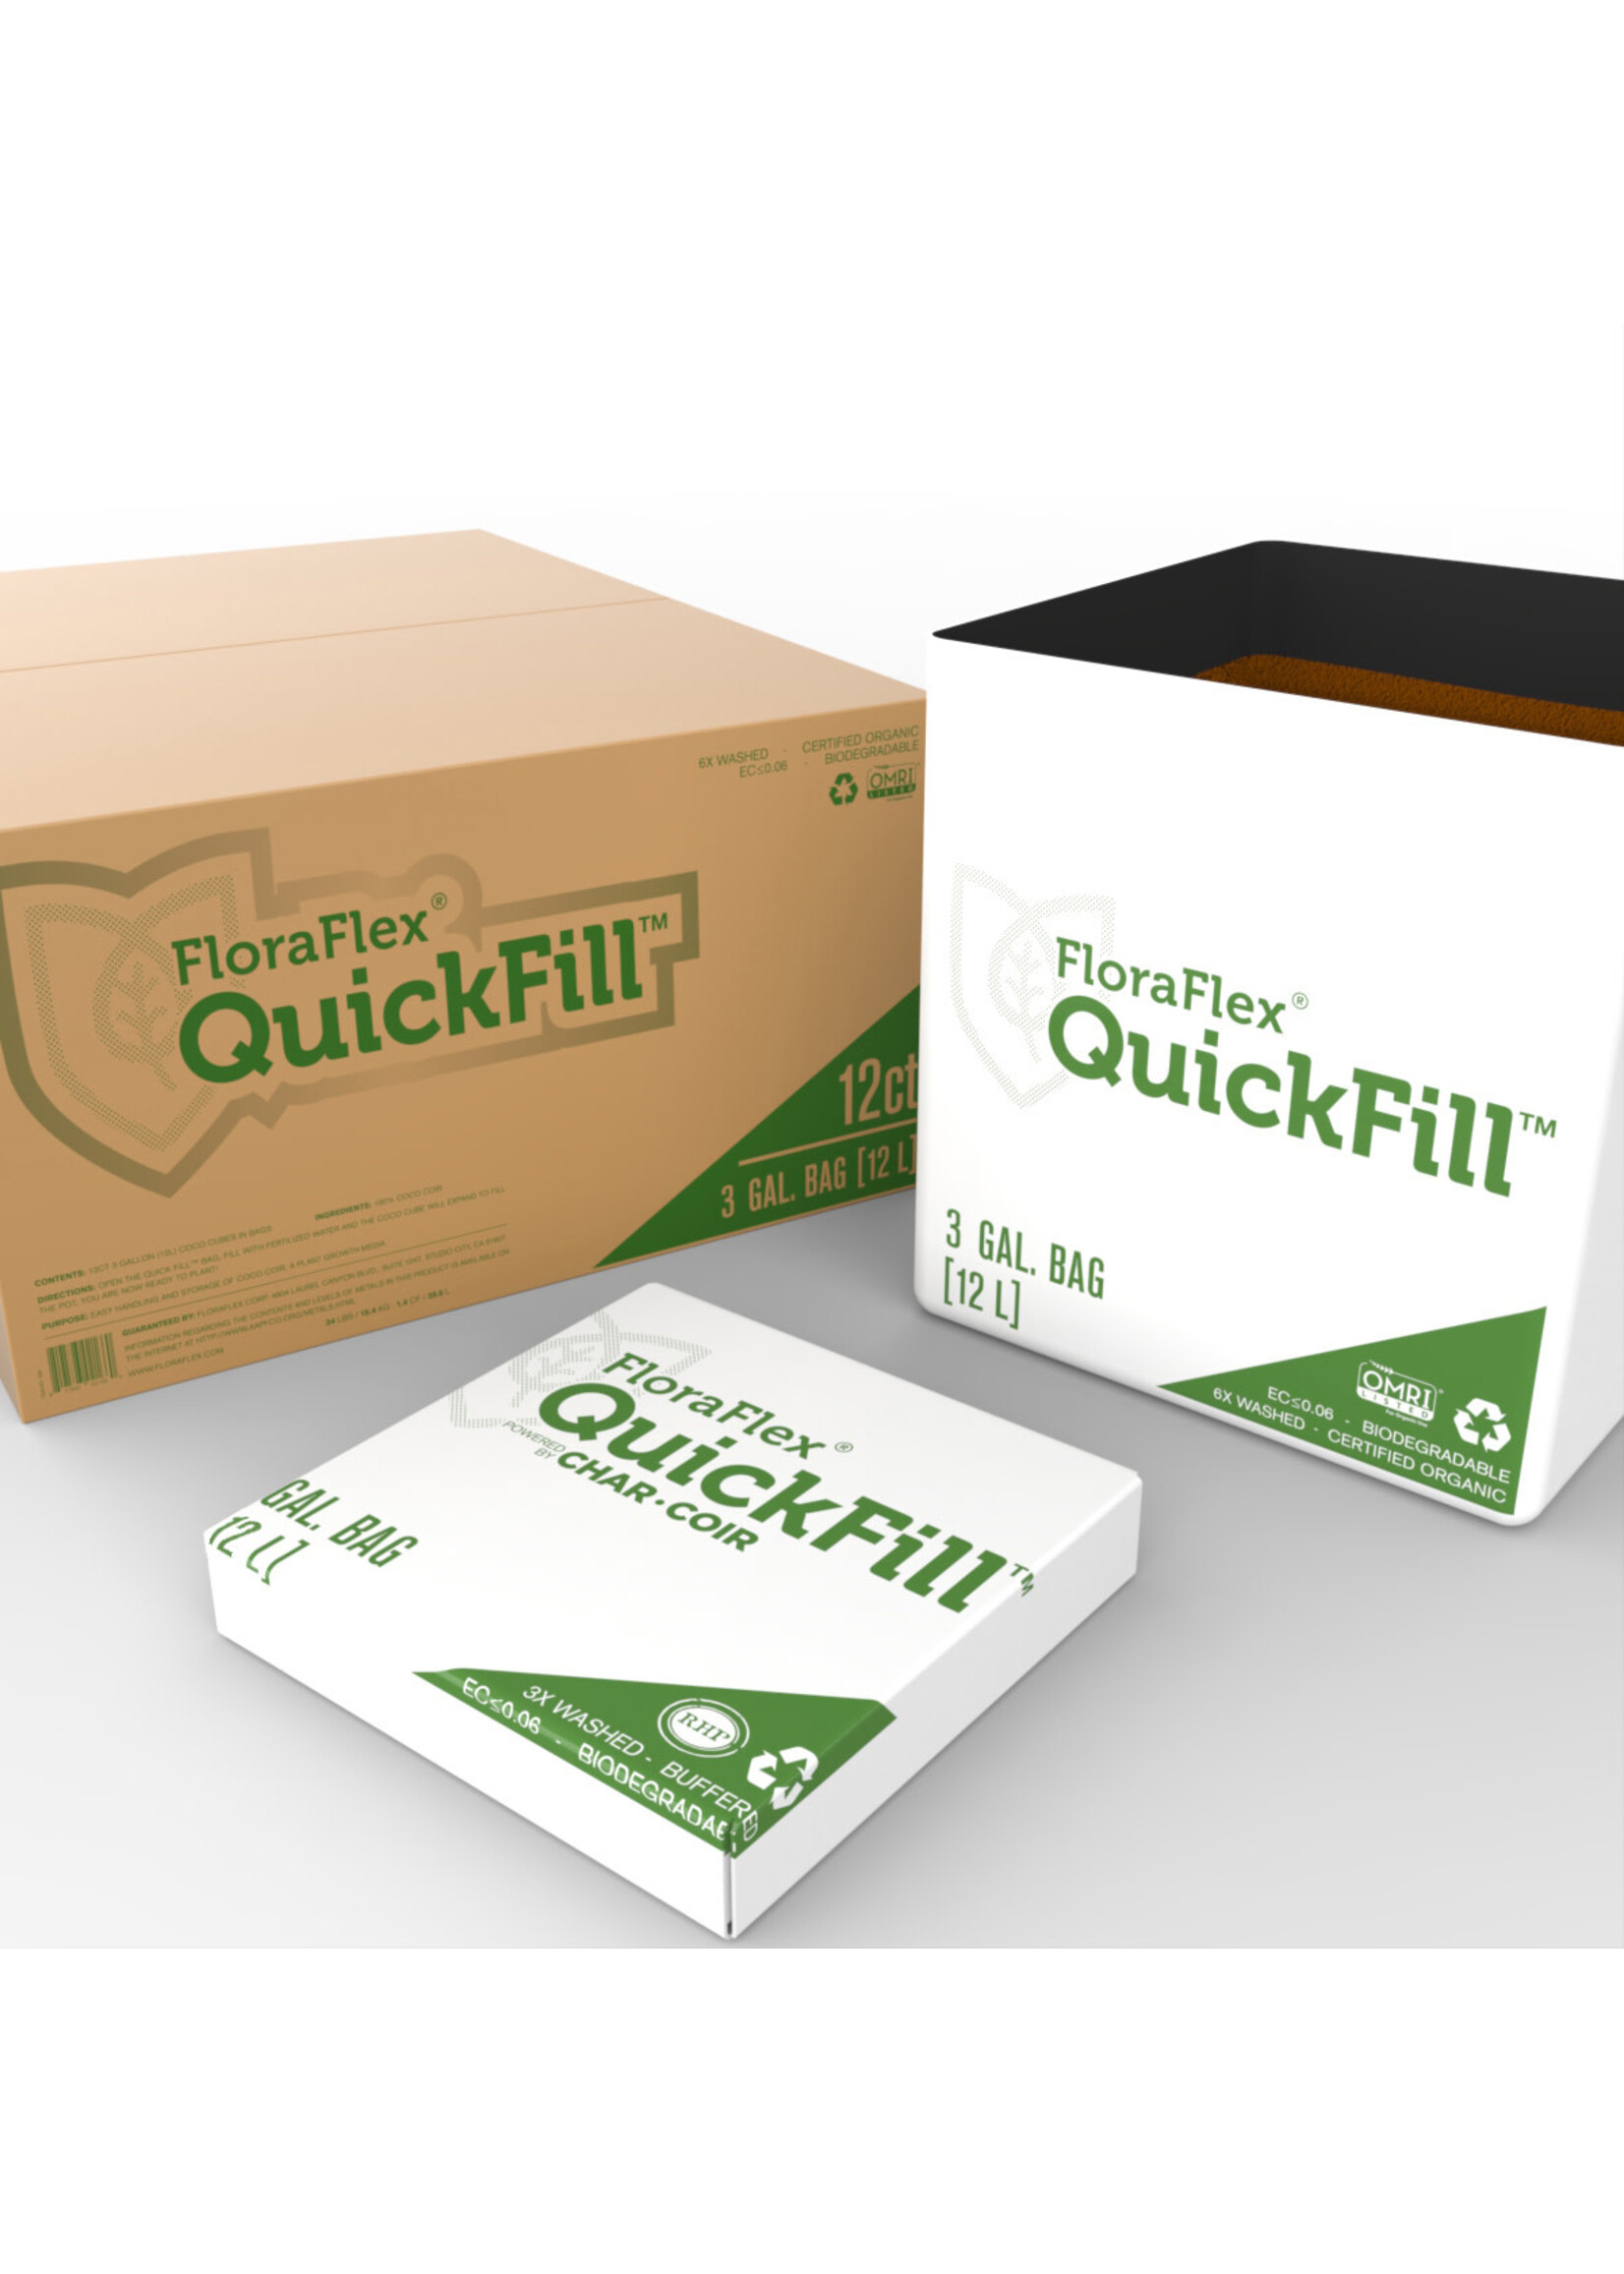 FloraFlex Quickfill 2 Gallon Bag - 60% WHC